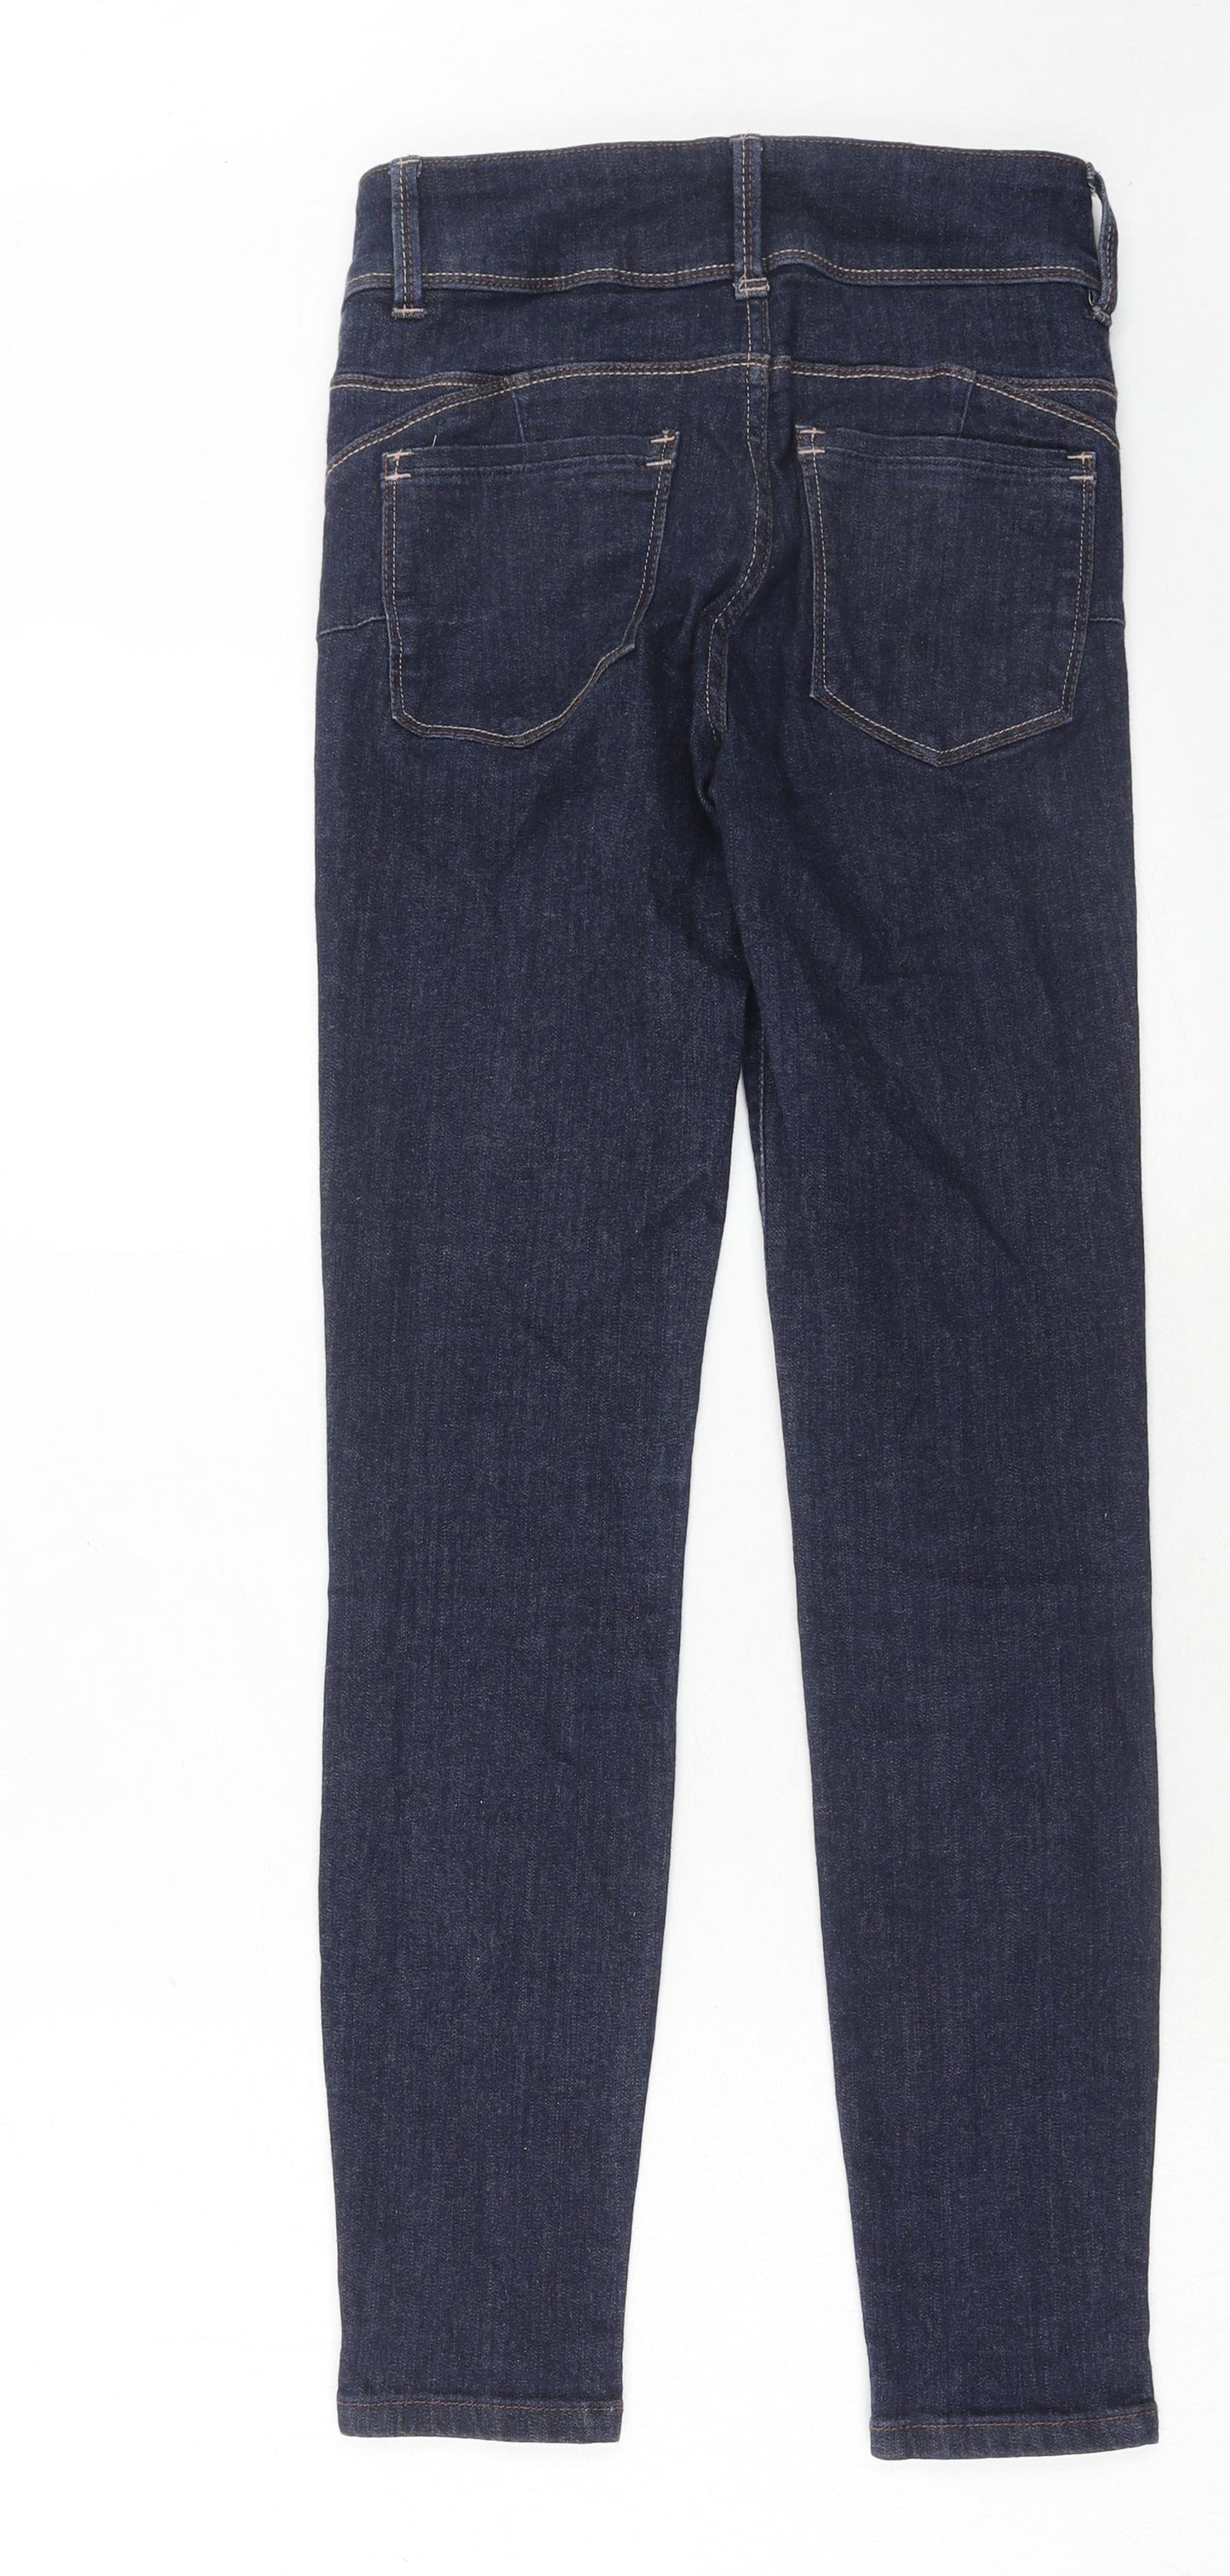 NEXT Womens Blue Cotton Skinny Jeans Size 8 Regular Zip